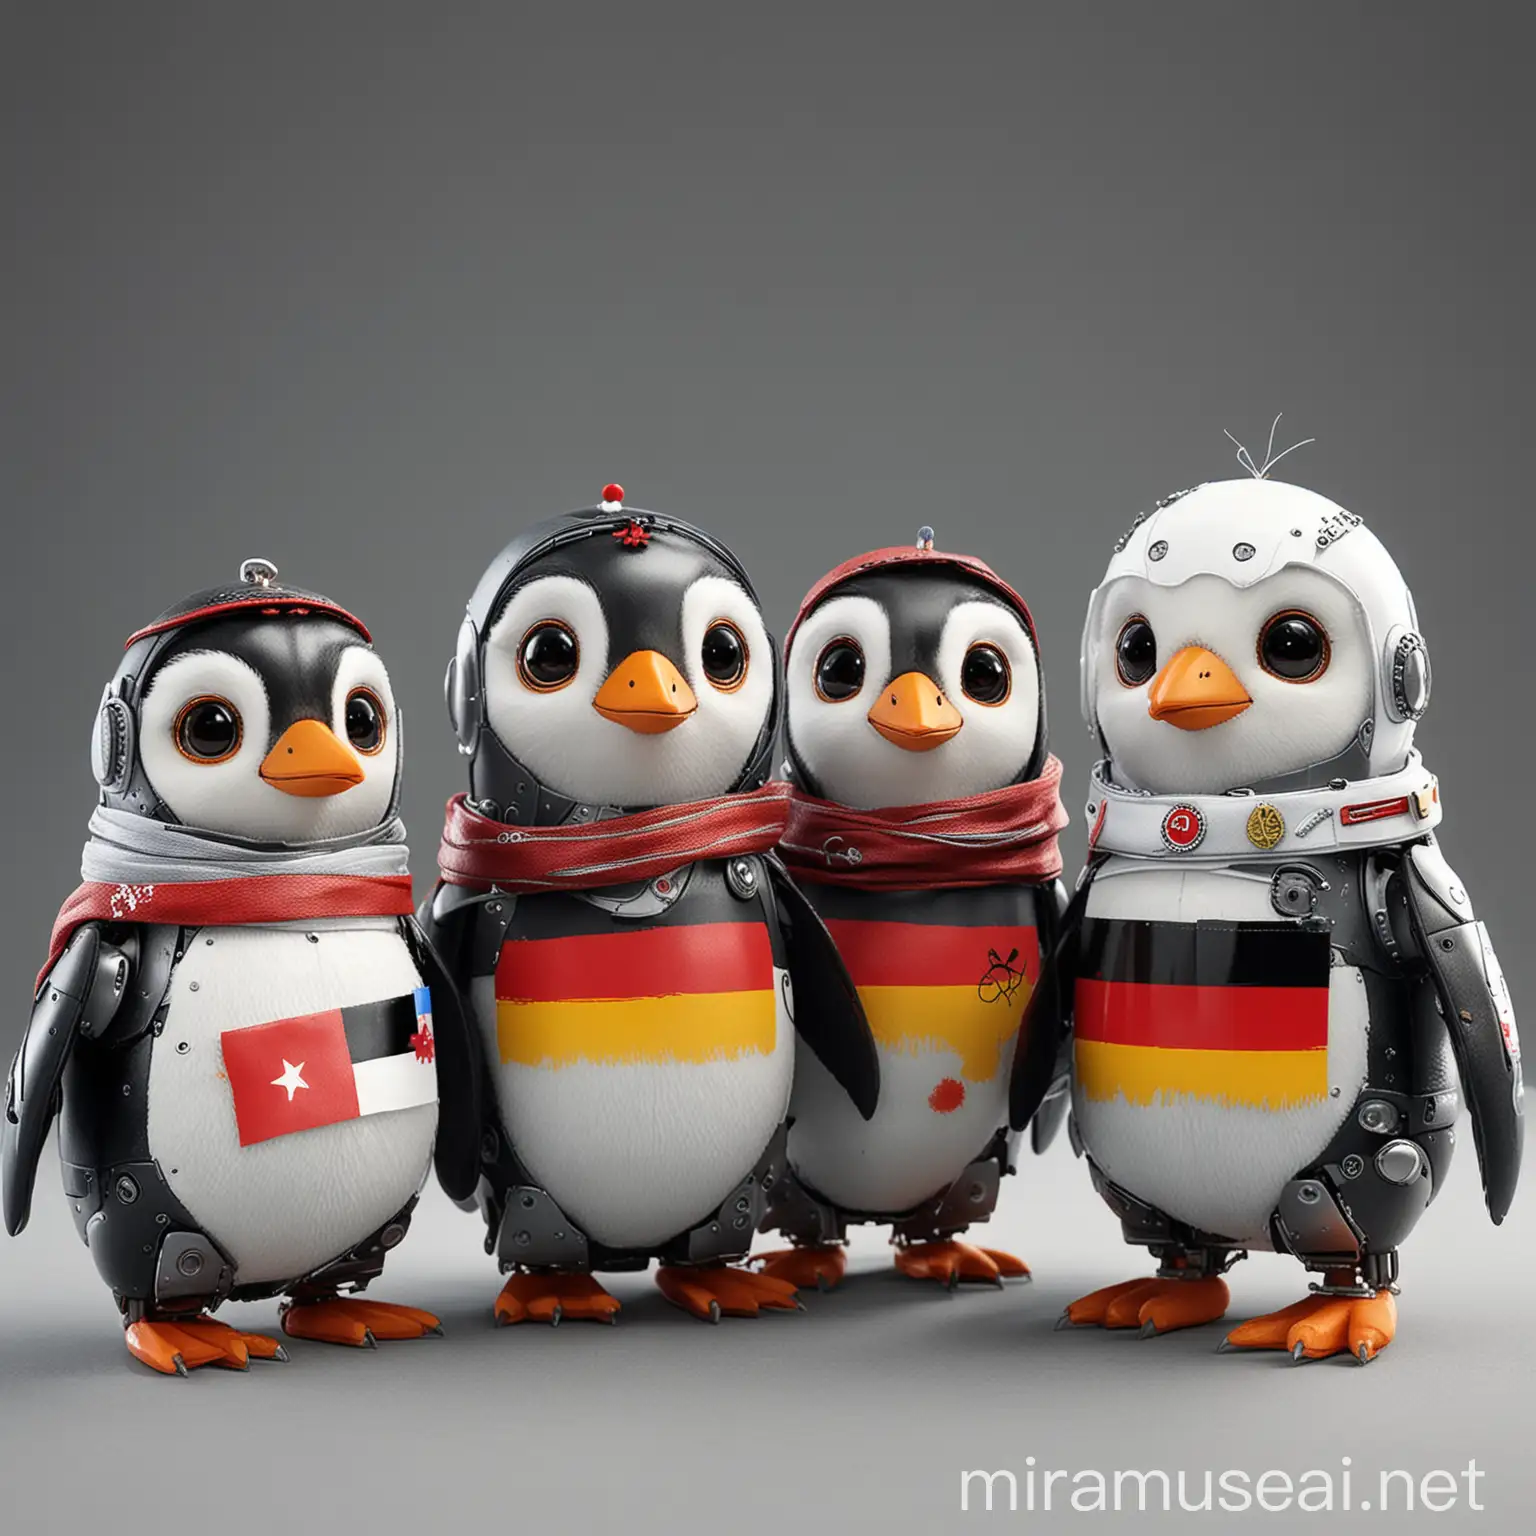 Three Cute Robot Penguins Dressed as Trkiye Germany and France